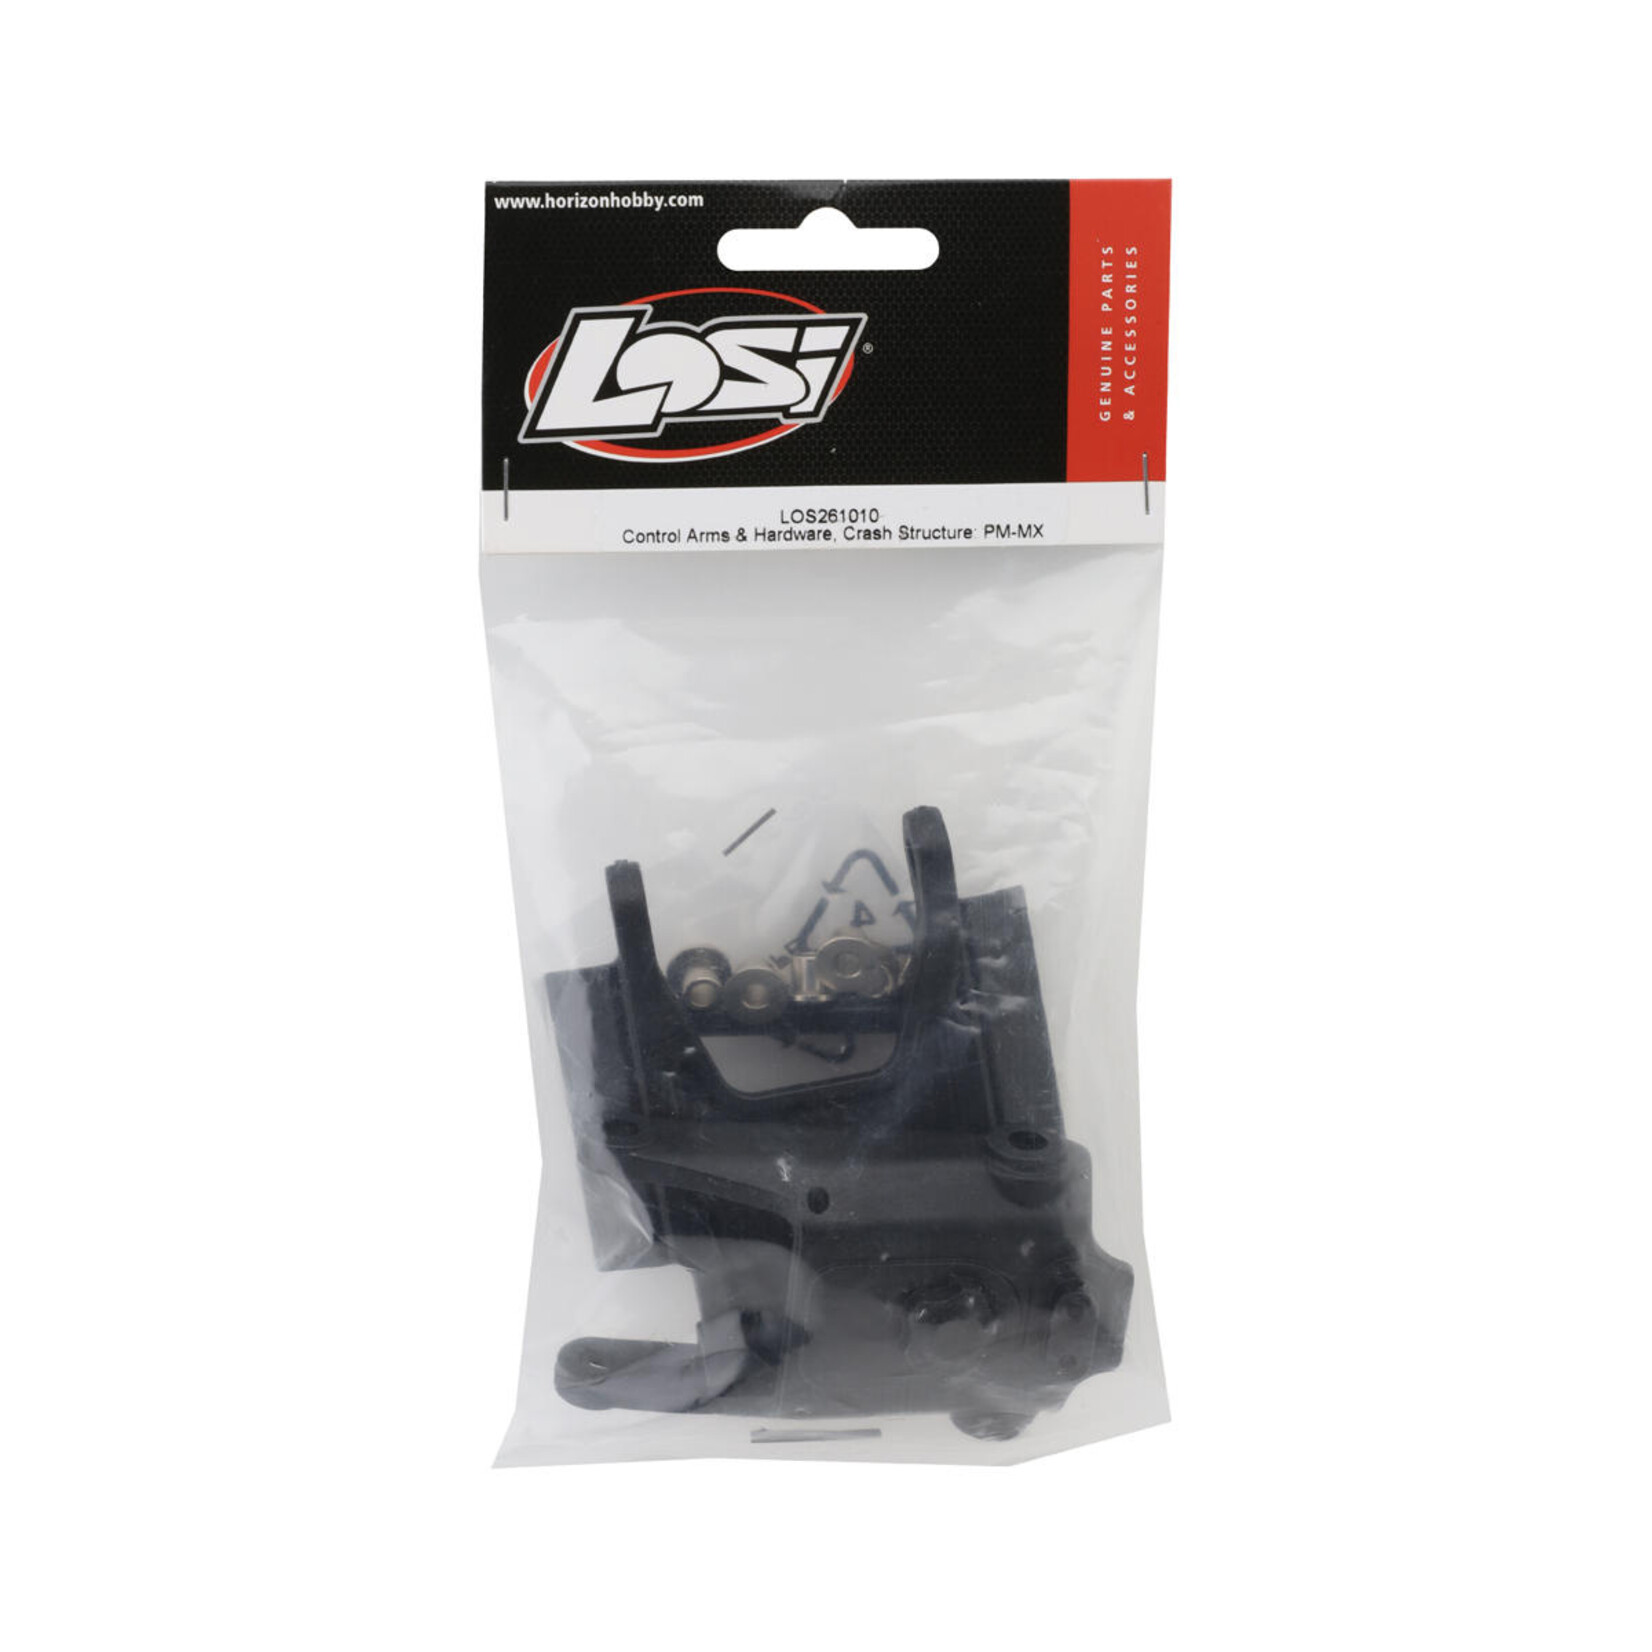 Losi Losi Promoto-MX Control Arms & Crash Structure #LOS261010